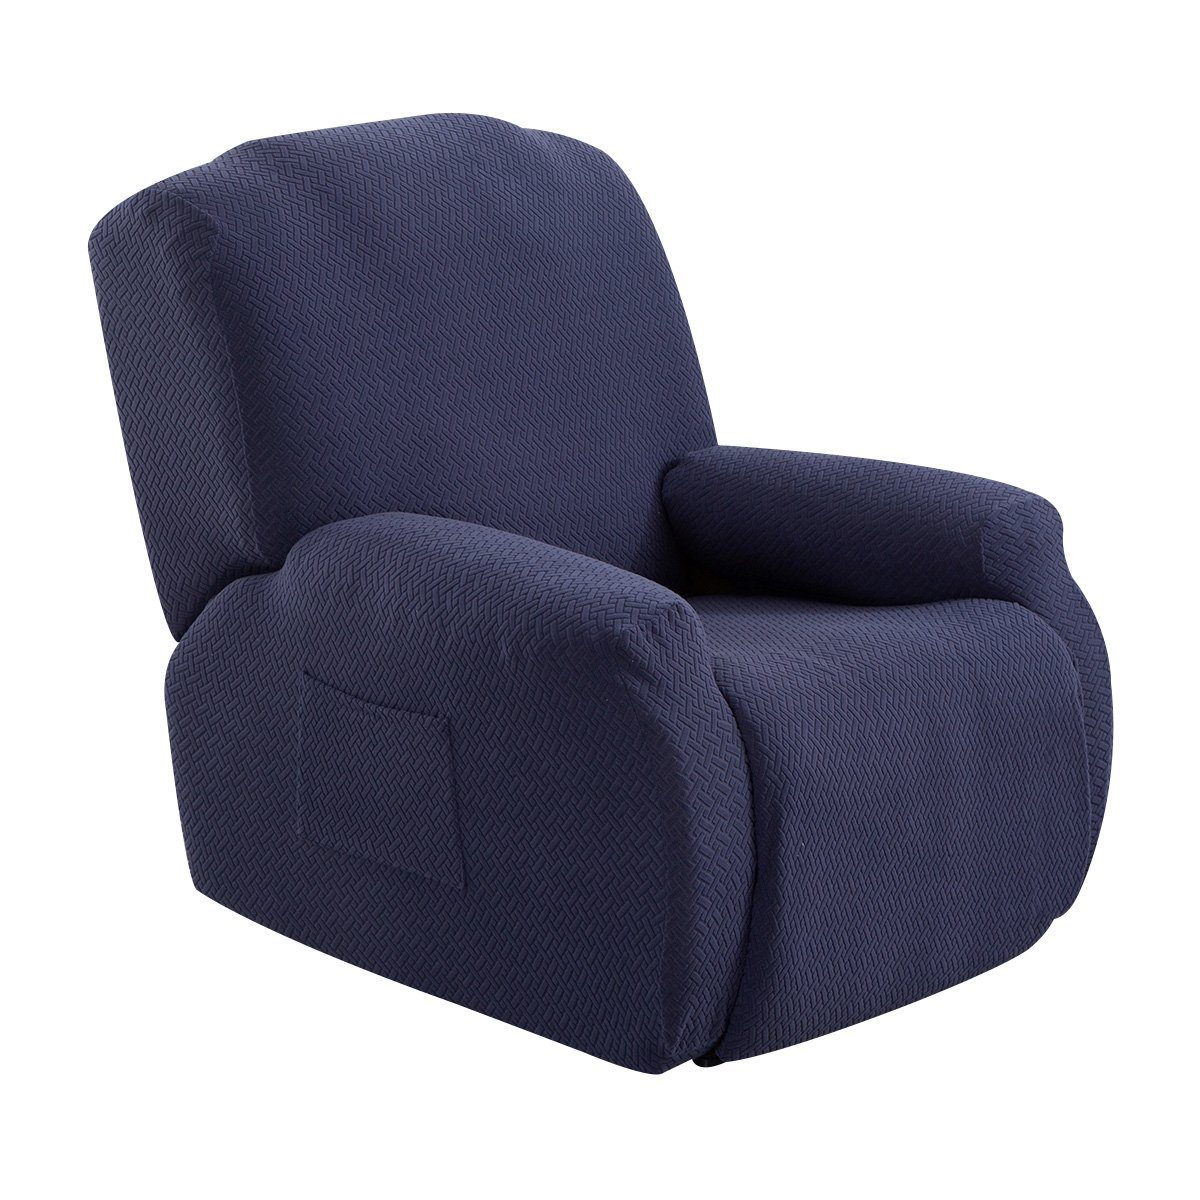 Sesselhusse Sesselbezug Stretchhusse, Relaxsessel Komplett für Liege Sessel, Rosnek, mit Strukturoptik Blau | Sesselhussen